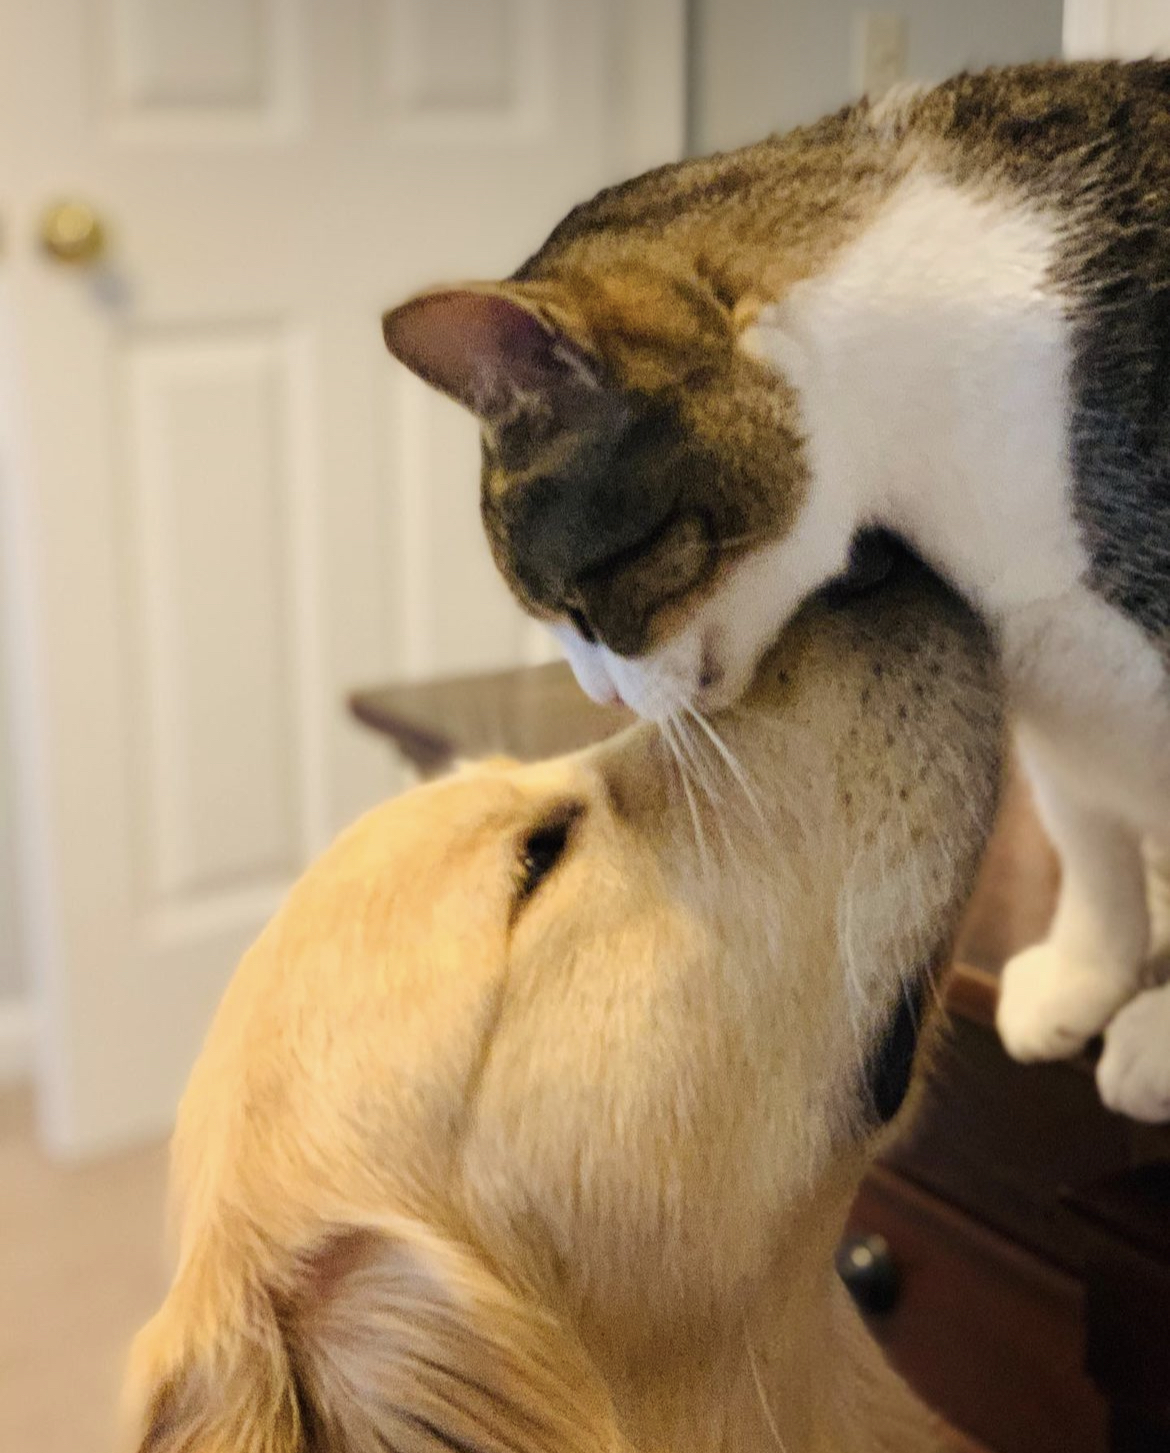 A Golden Retriever and cat show each other affection.